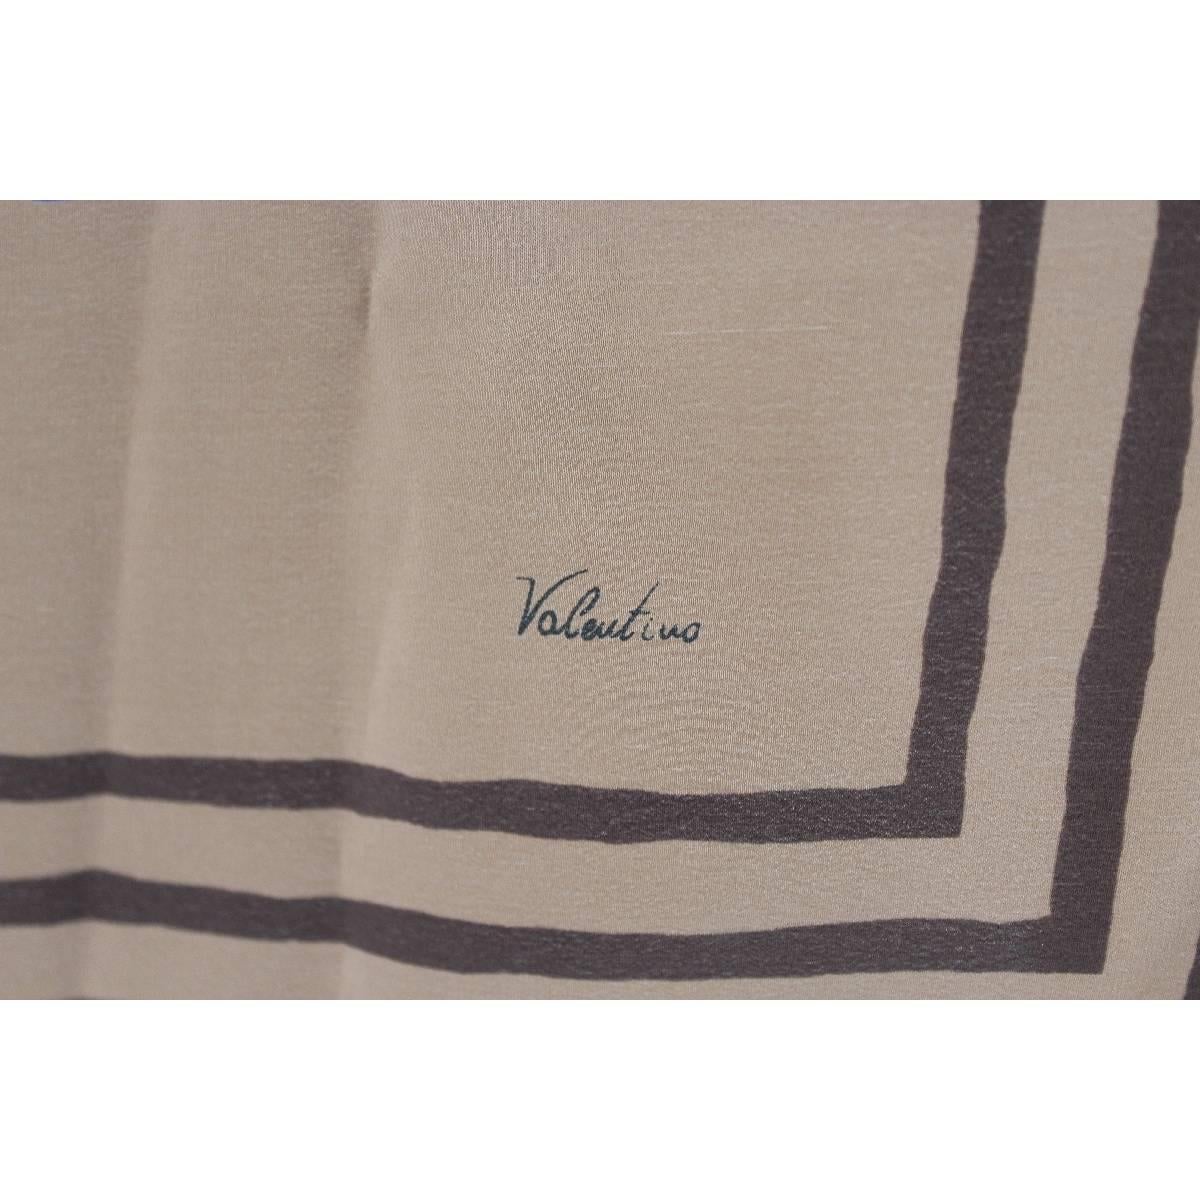 Brown Valentino silk brown red scarves handmade flower made italy 134×134 CM vintage